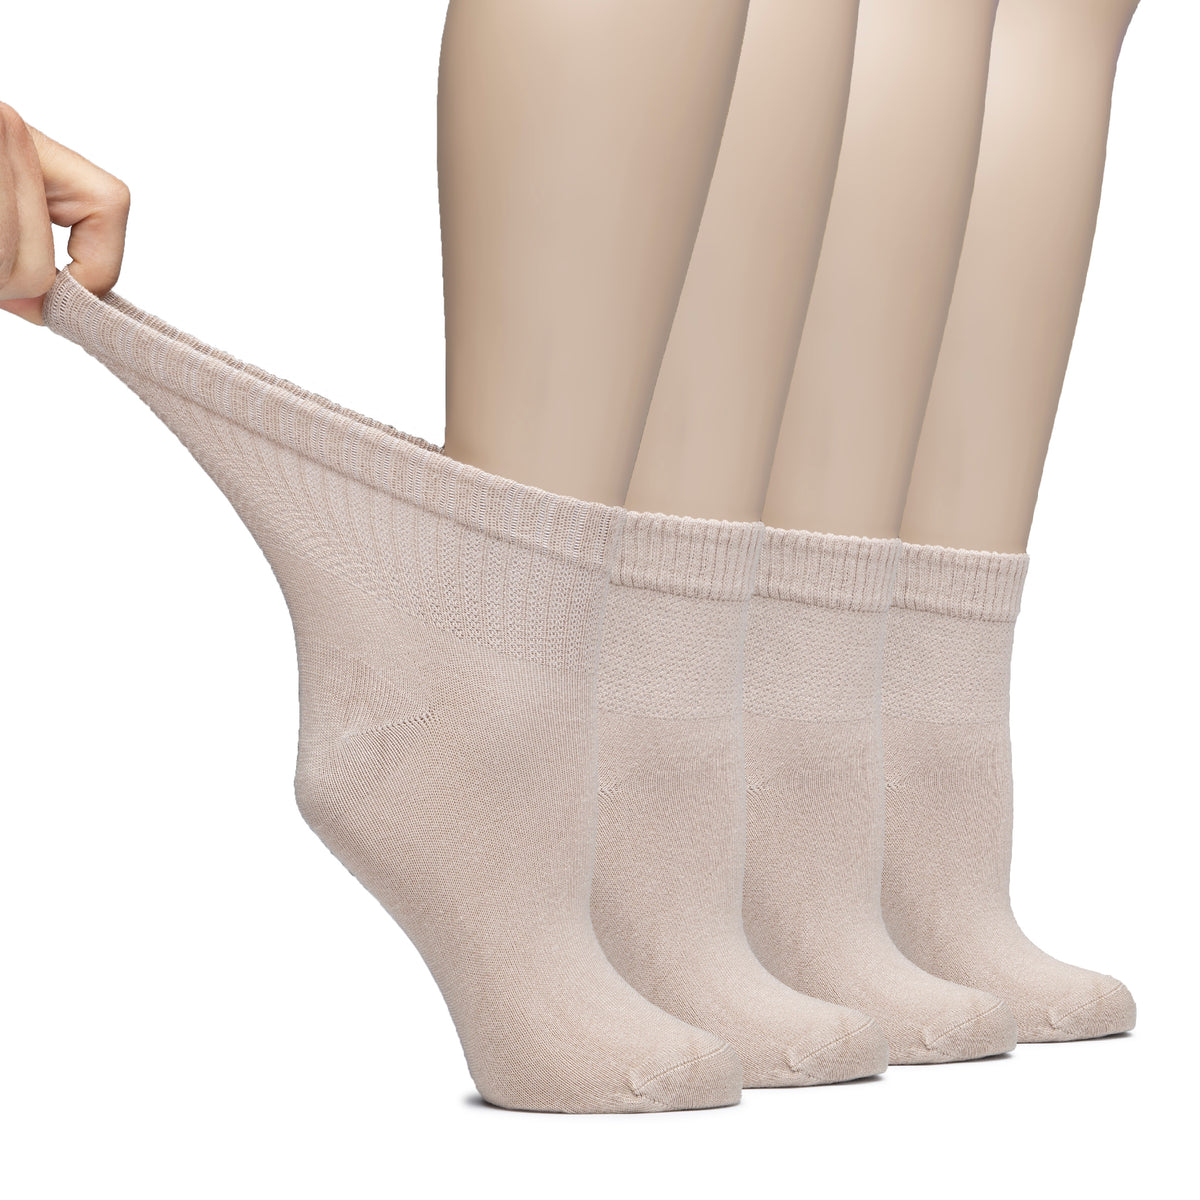 Hugh Ugoli Lightweight Women's Diabetic Ankle Socks Bamboo Thin Socks Seamless Toe and Non-Binding Top, 4 Pairs, , Shoe Size: 6-9/10-12 | Shoe Size: 10-12 | Light Beige